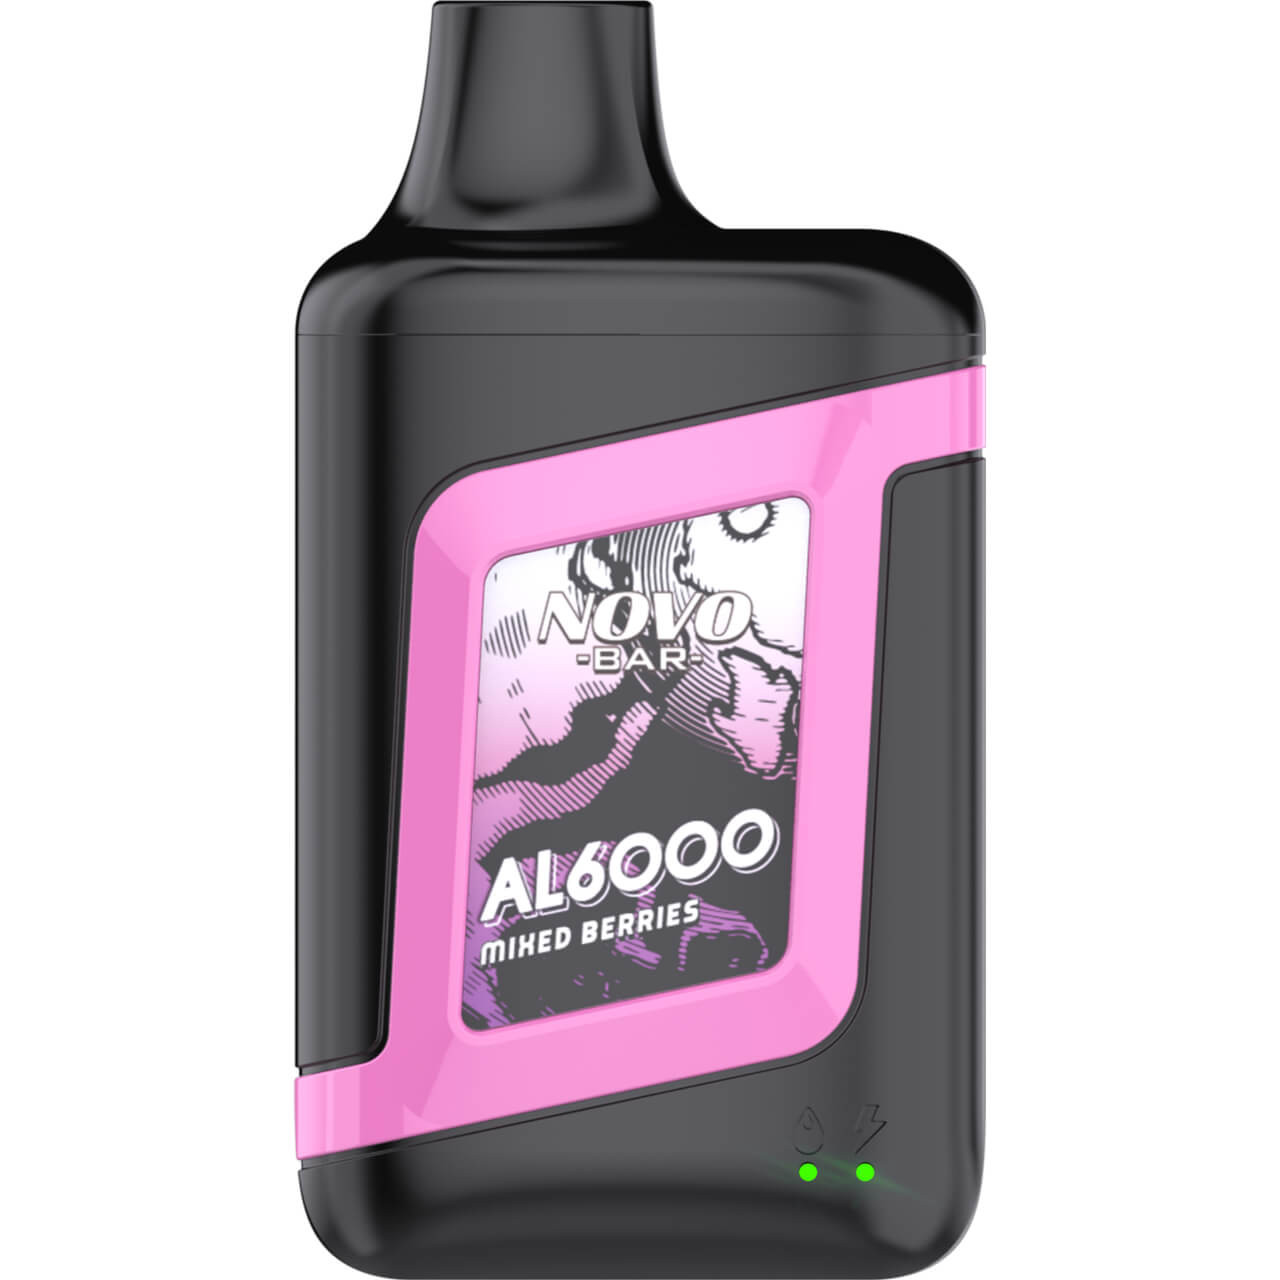 SMOK NOVO Bar AL6000 Disposable Device (6000 Puffs) -Mixed Berries